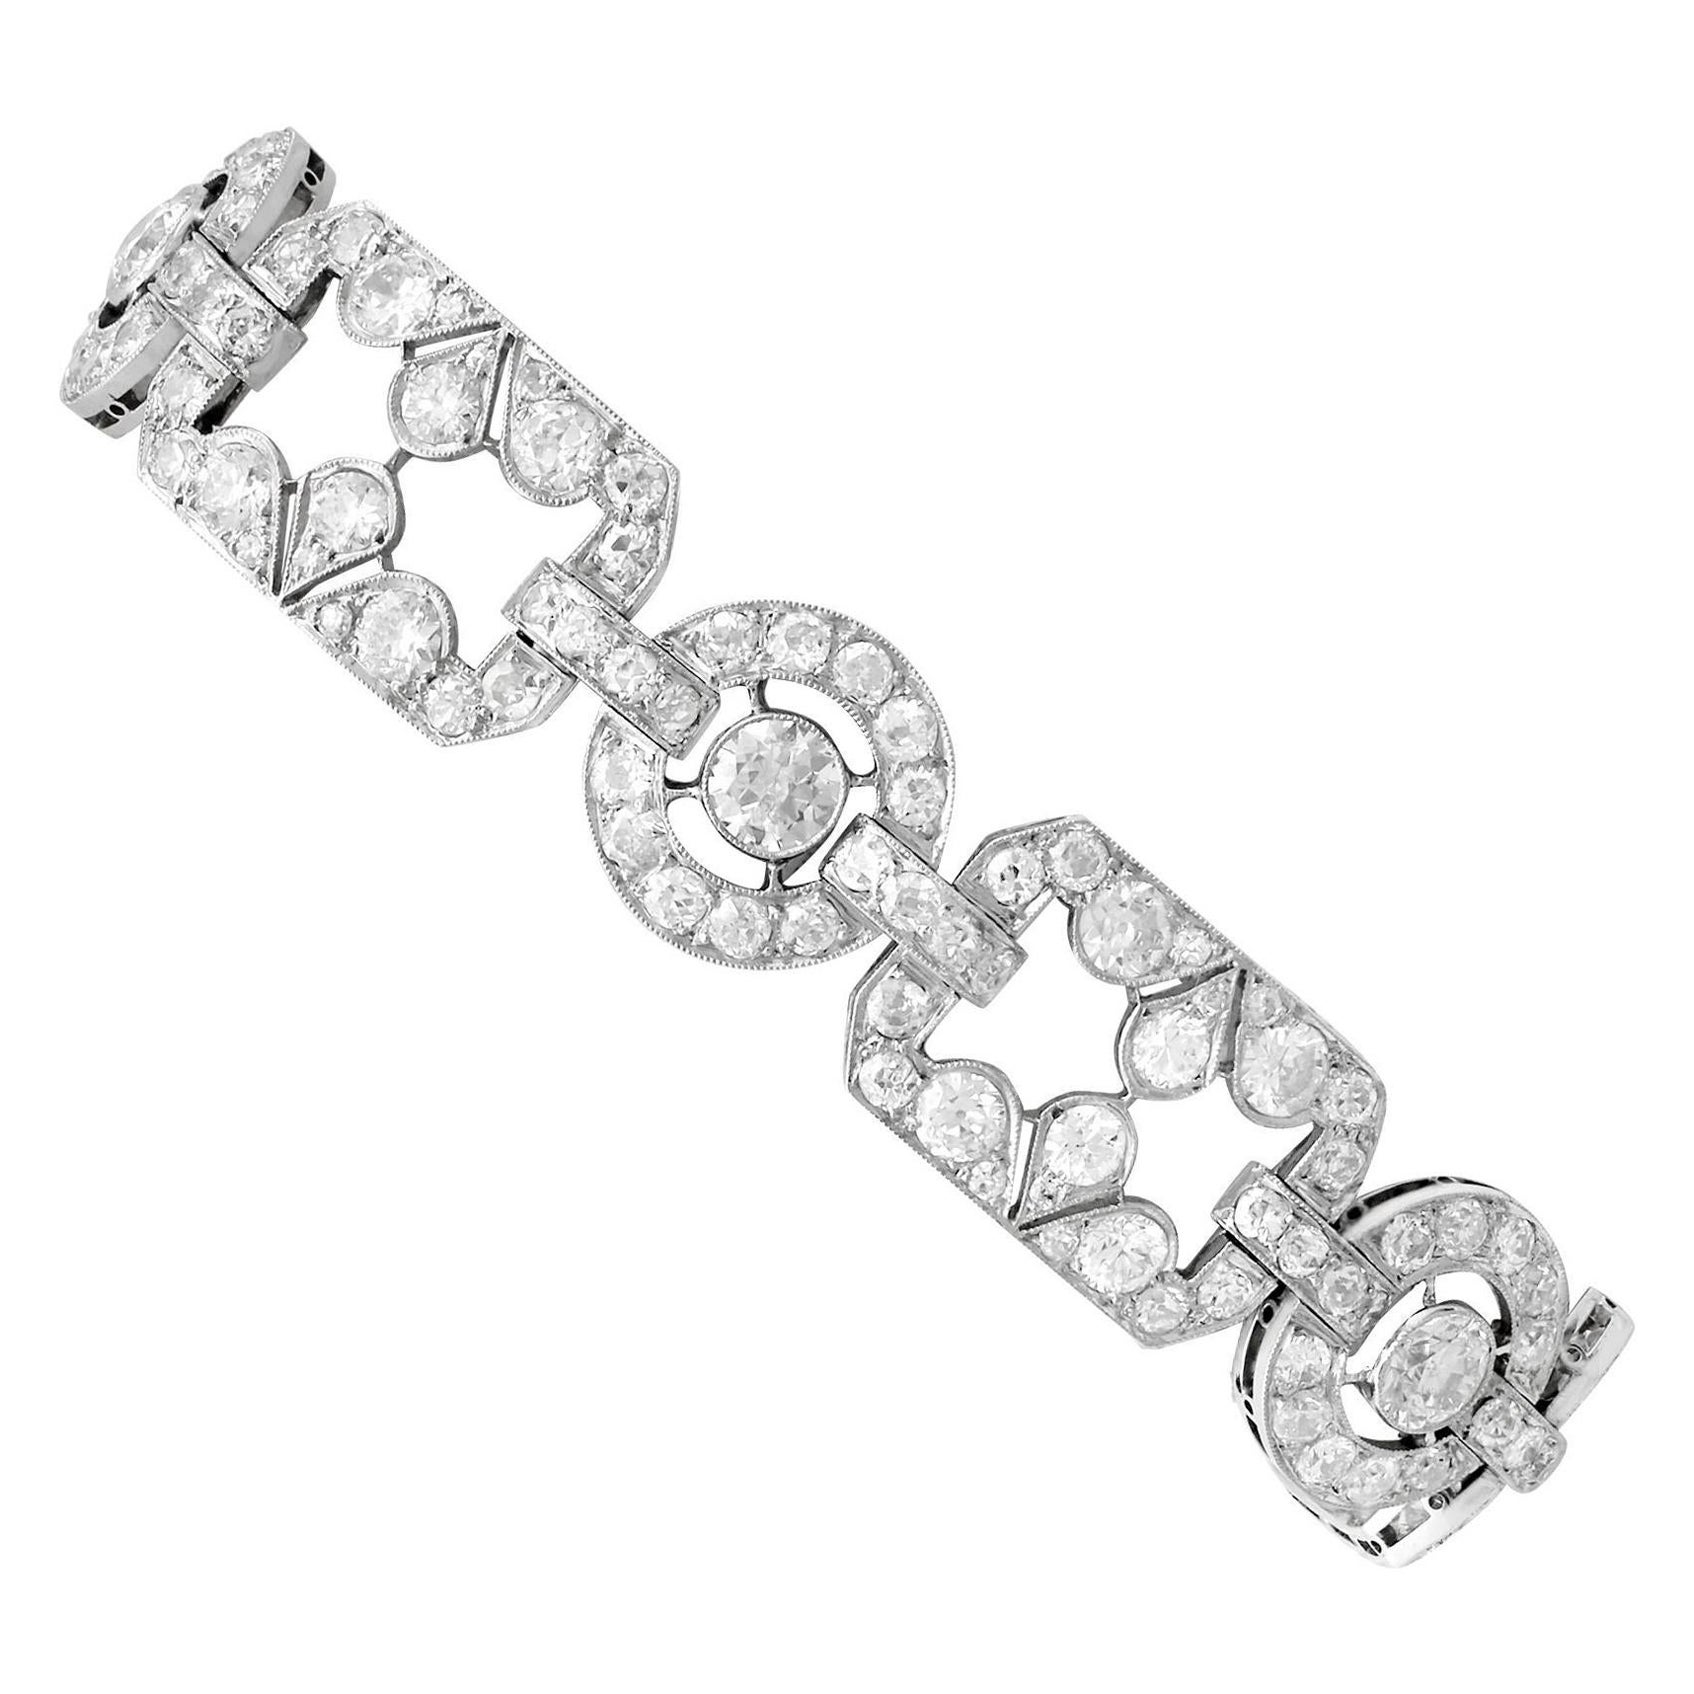 1930s, Art Deco 12.29 Carat Diamond and Platinum Bracelet